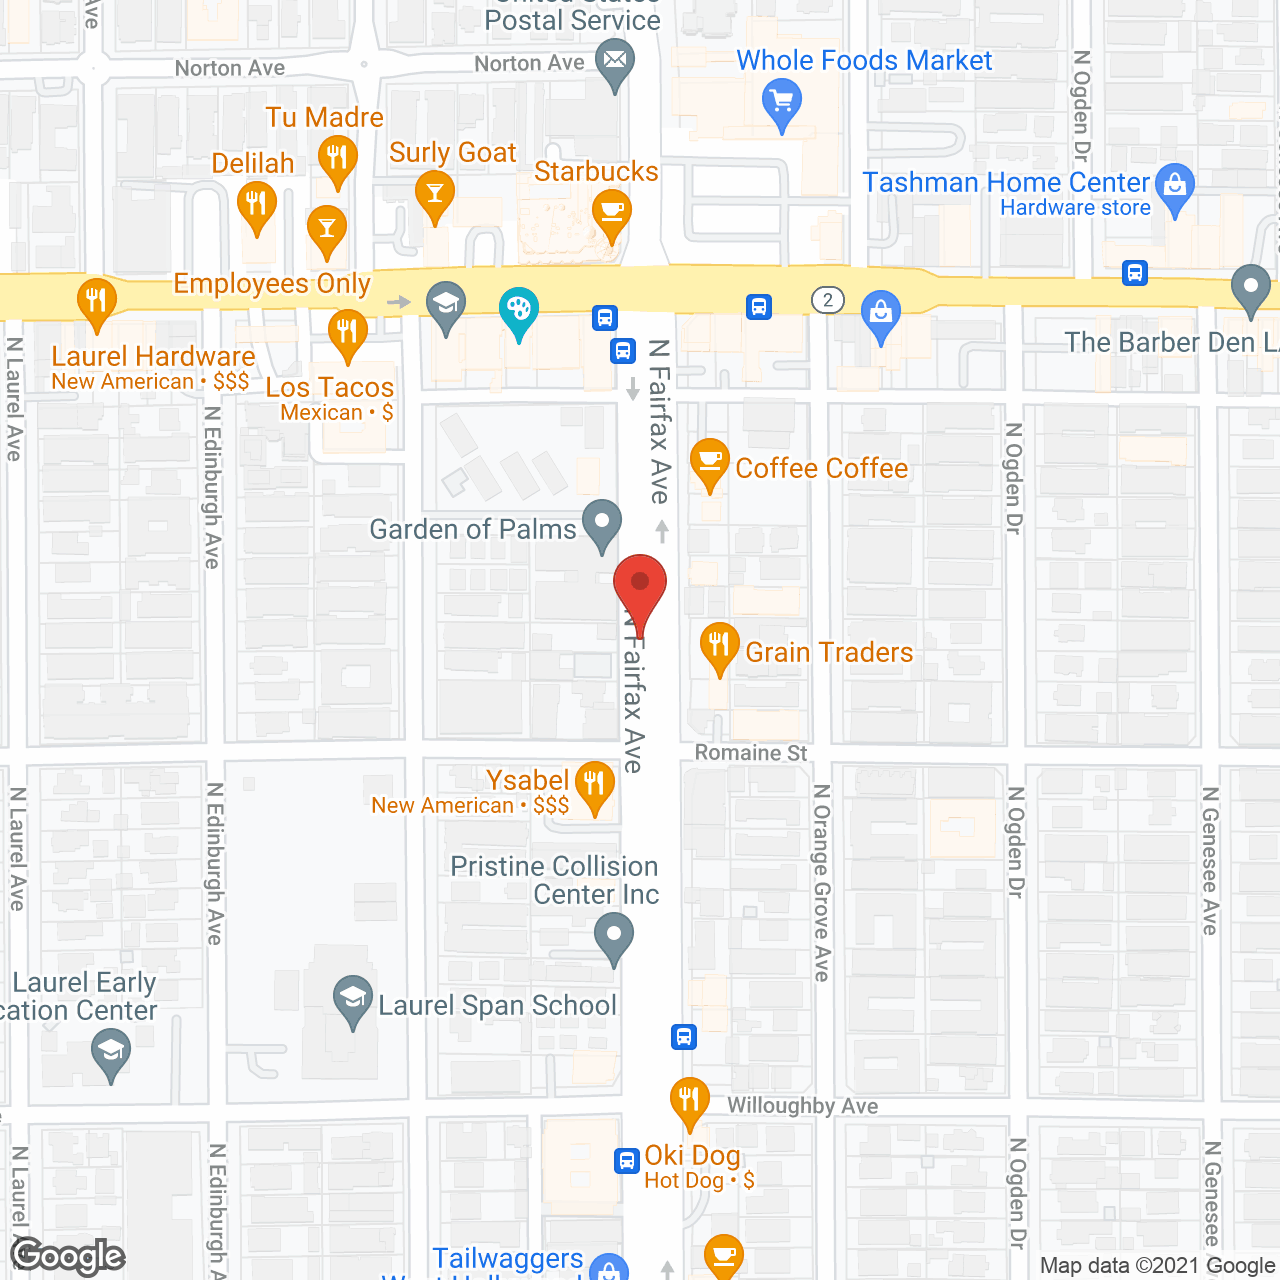 Garden of Palms in google map